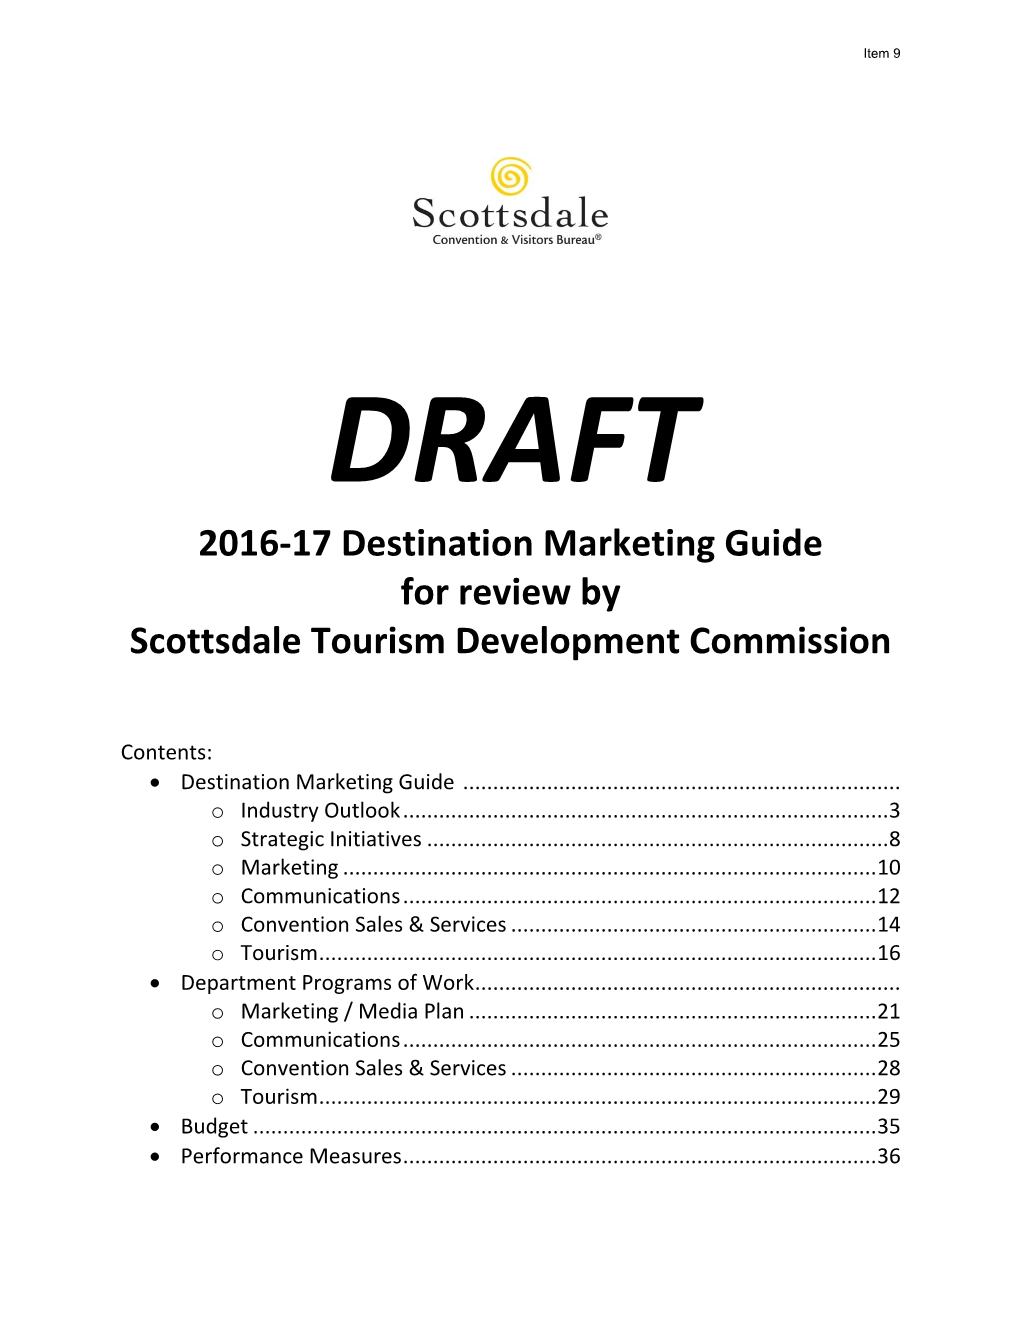 2016-17 Destination Marketing Guide for Review by Scottsdale Tourism Development Commission